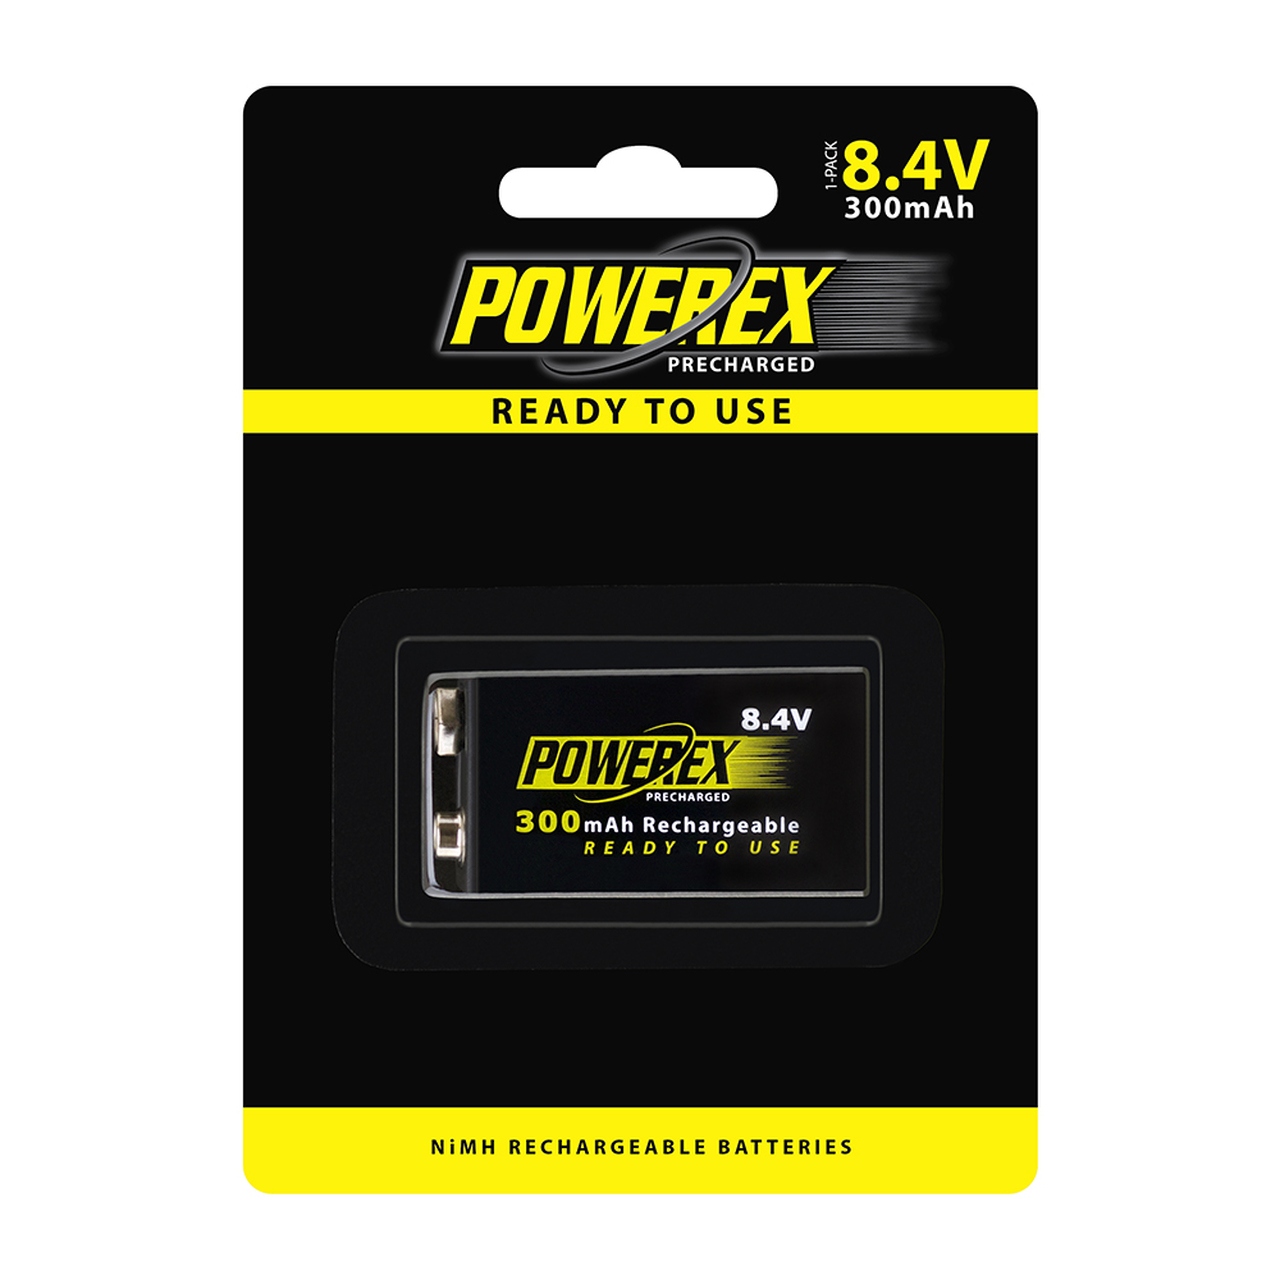 Powerex Precharged 8,4V 300mAh